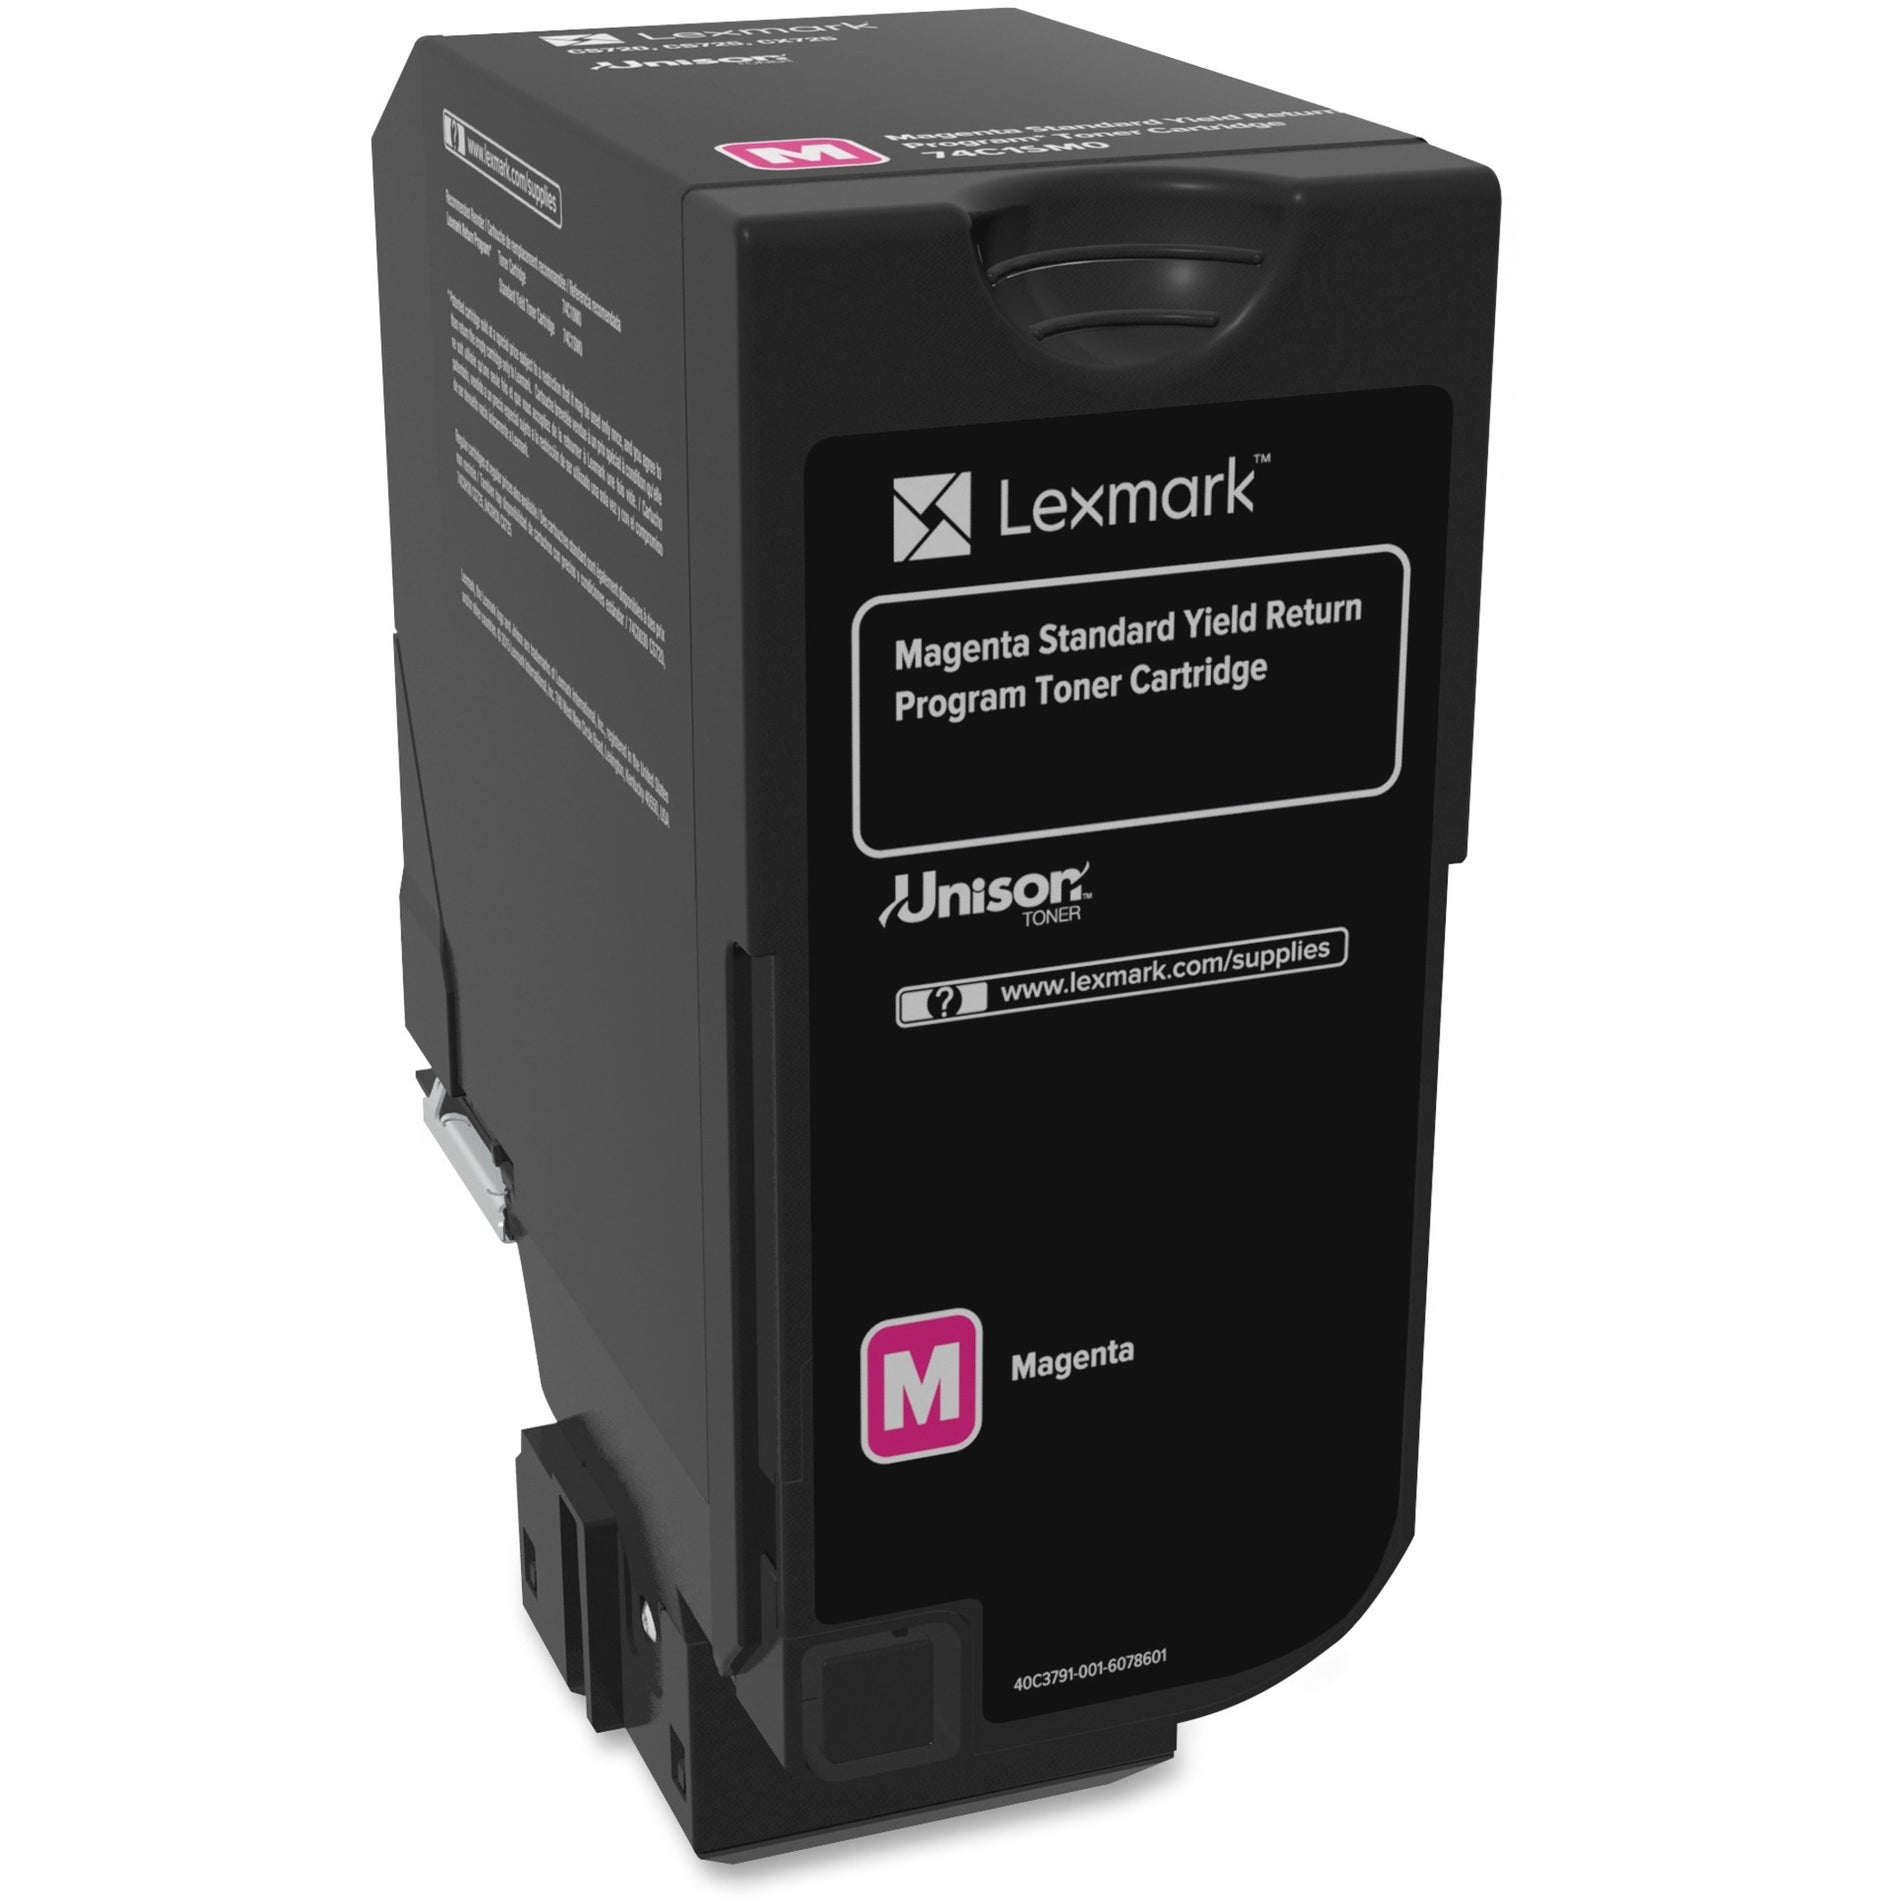 Lexmark 74C1SM0 CS72 Return Program Standard Yield Toner Cartridge, Magenta, 7000 Pages